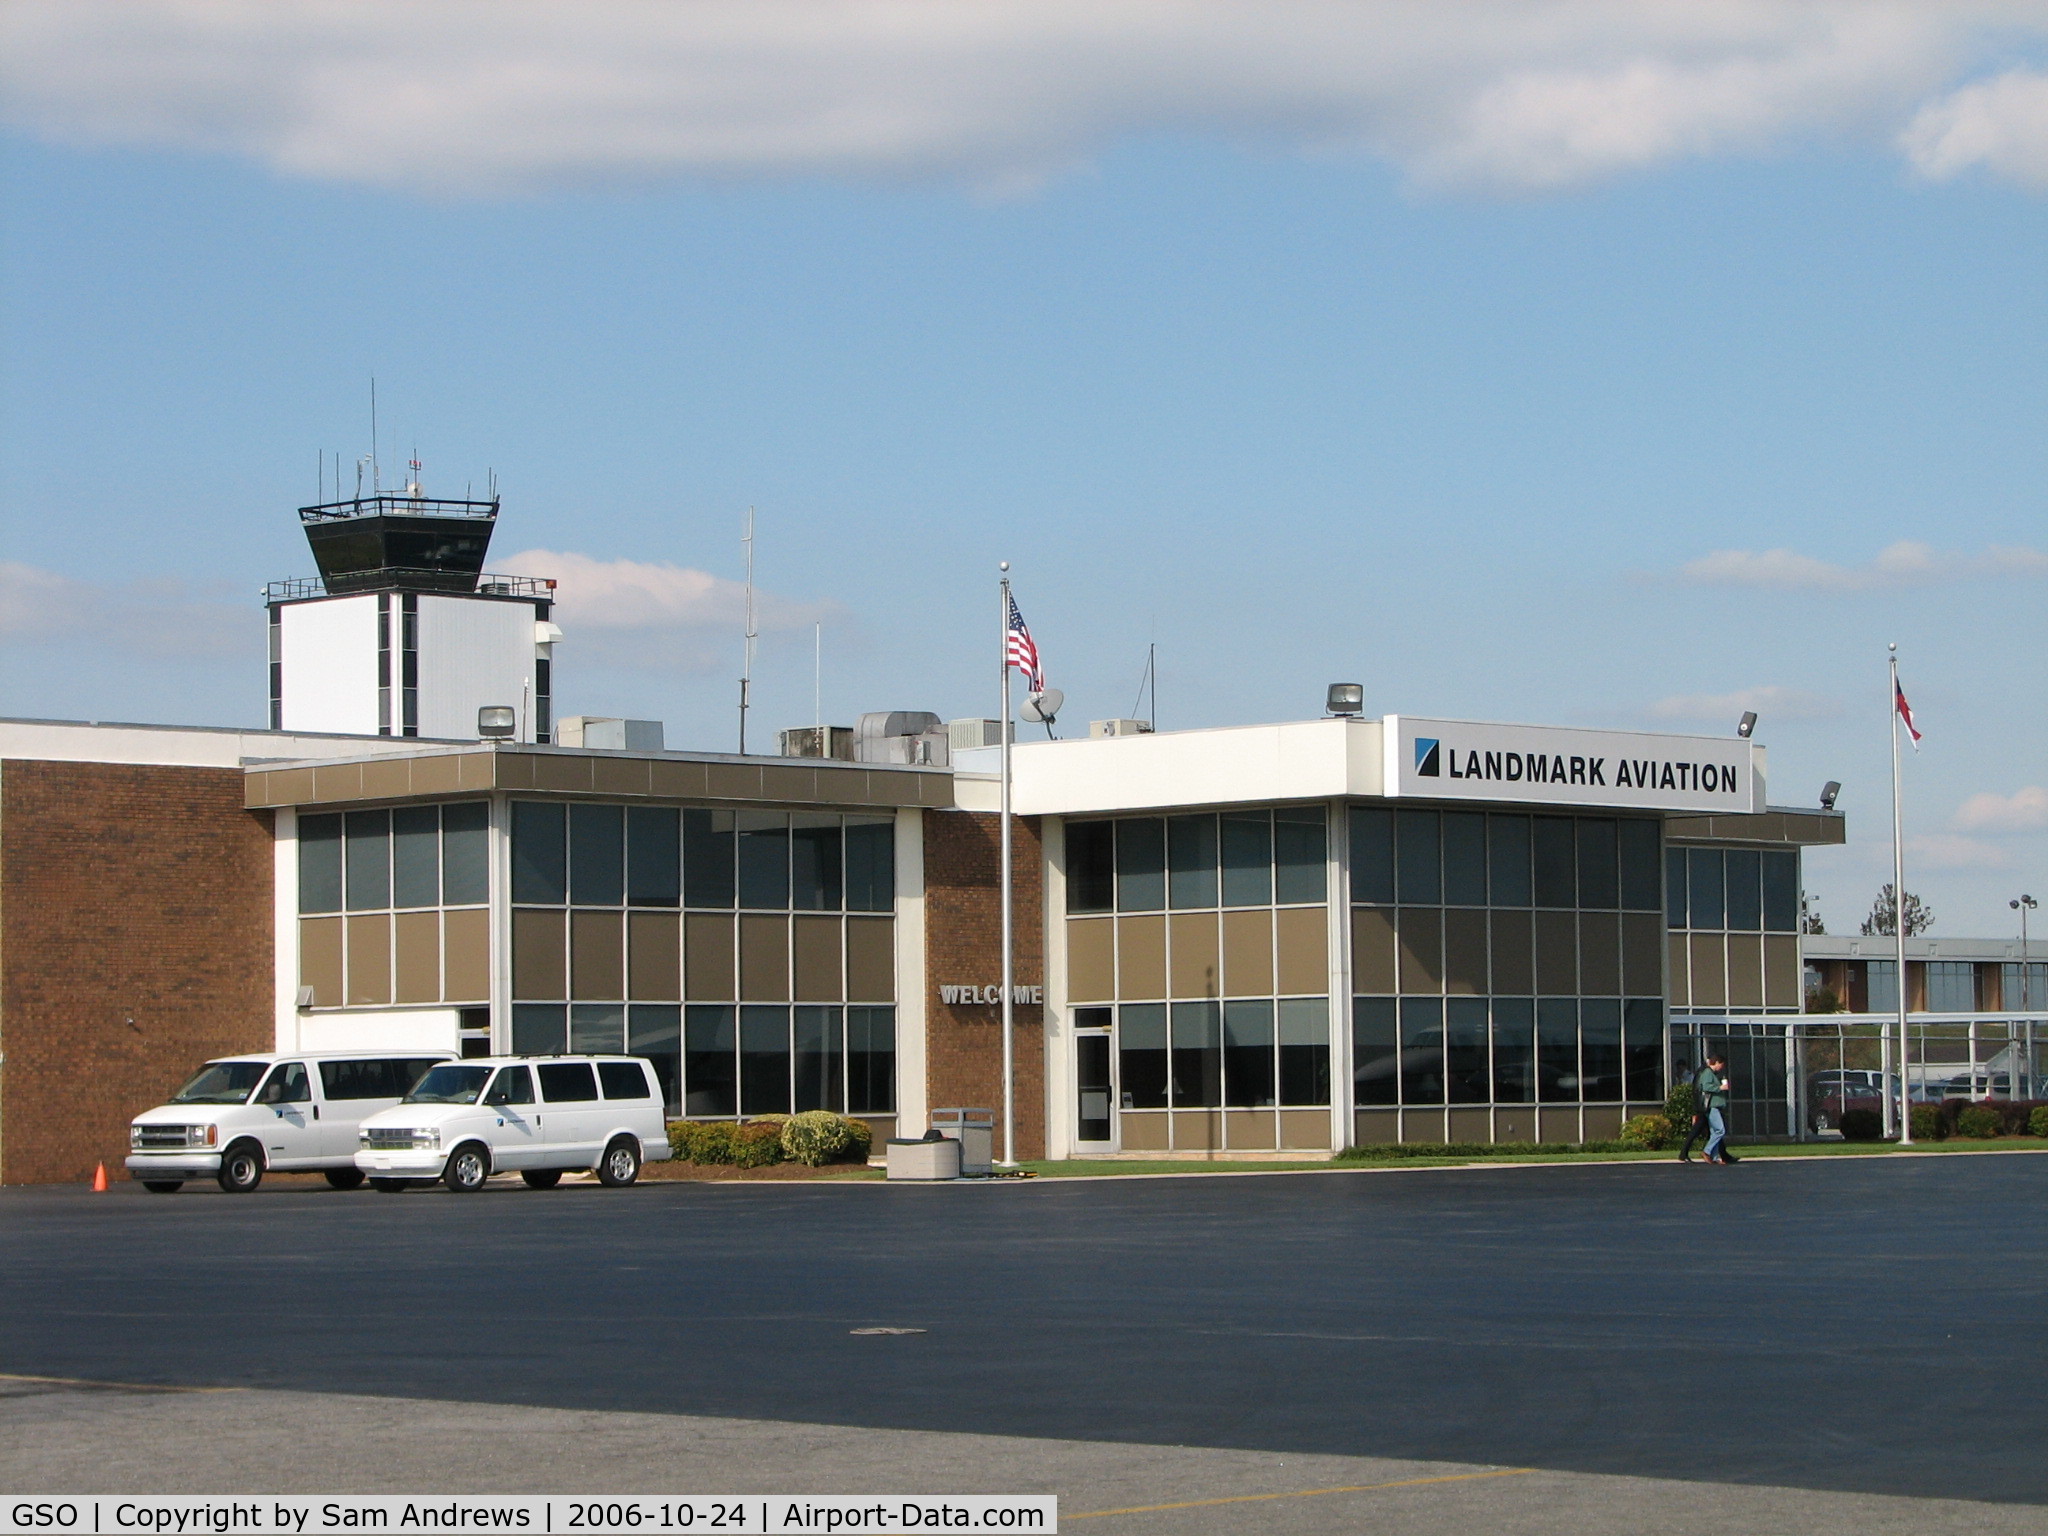 Piedmont Triad International Airport (GSO) - Landmark Aviation